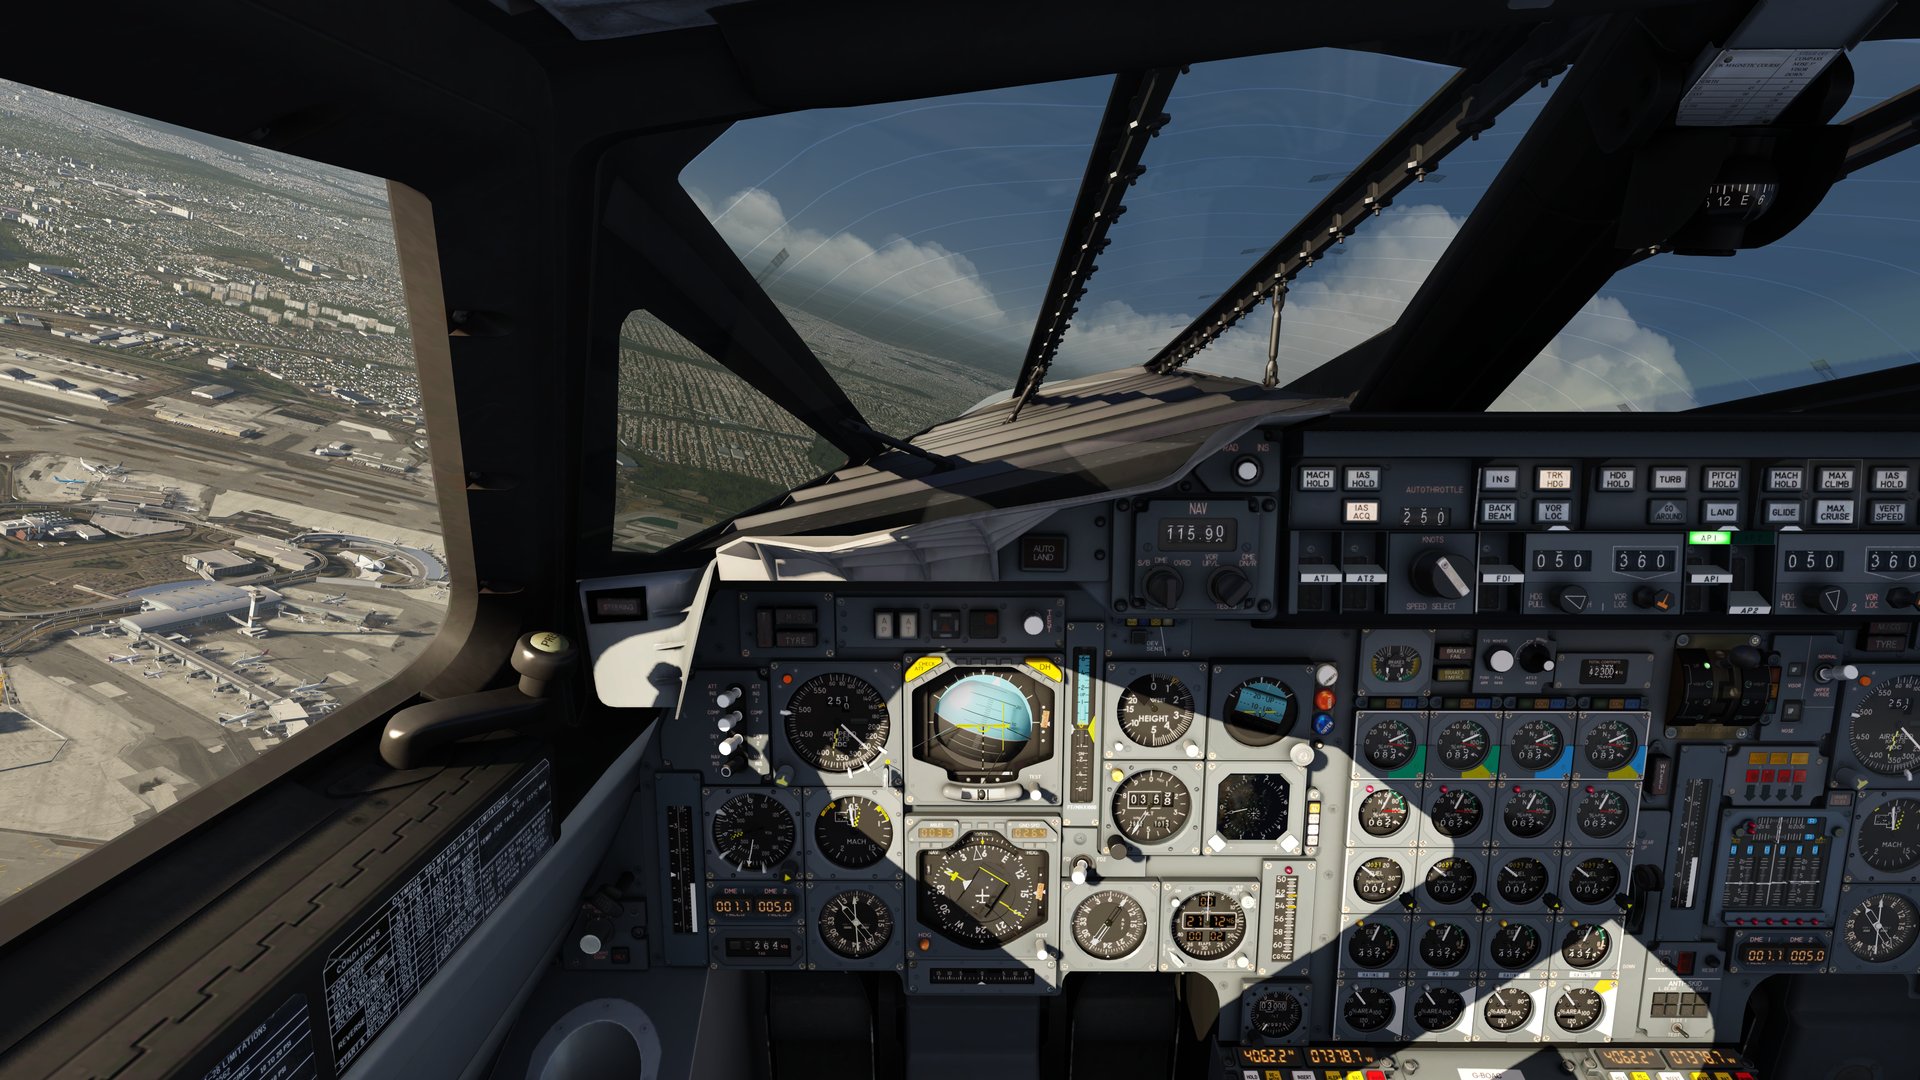 https://www.aerofly.com/community/index.php?attachment/33874-aerofly-fs-4-concorde-cockpit-over-kjfk-jpg/